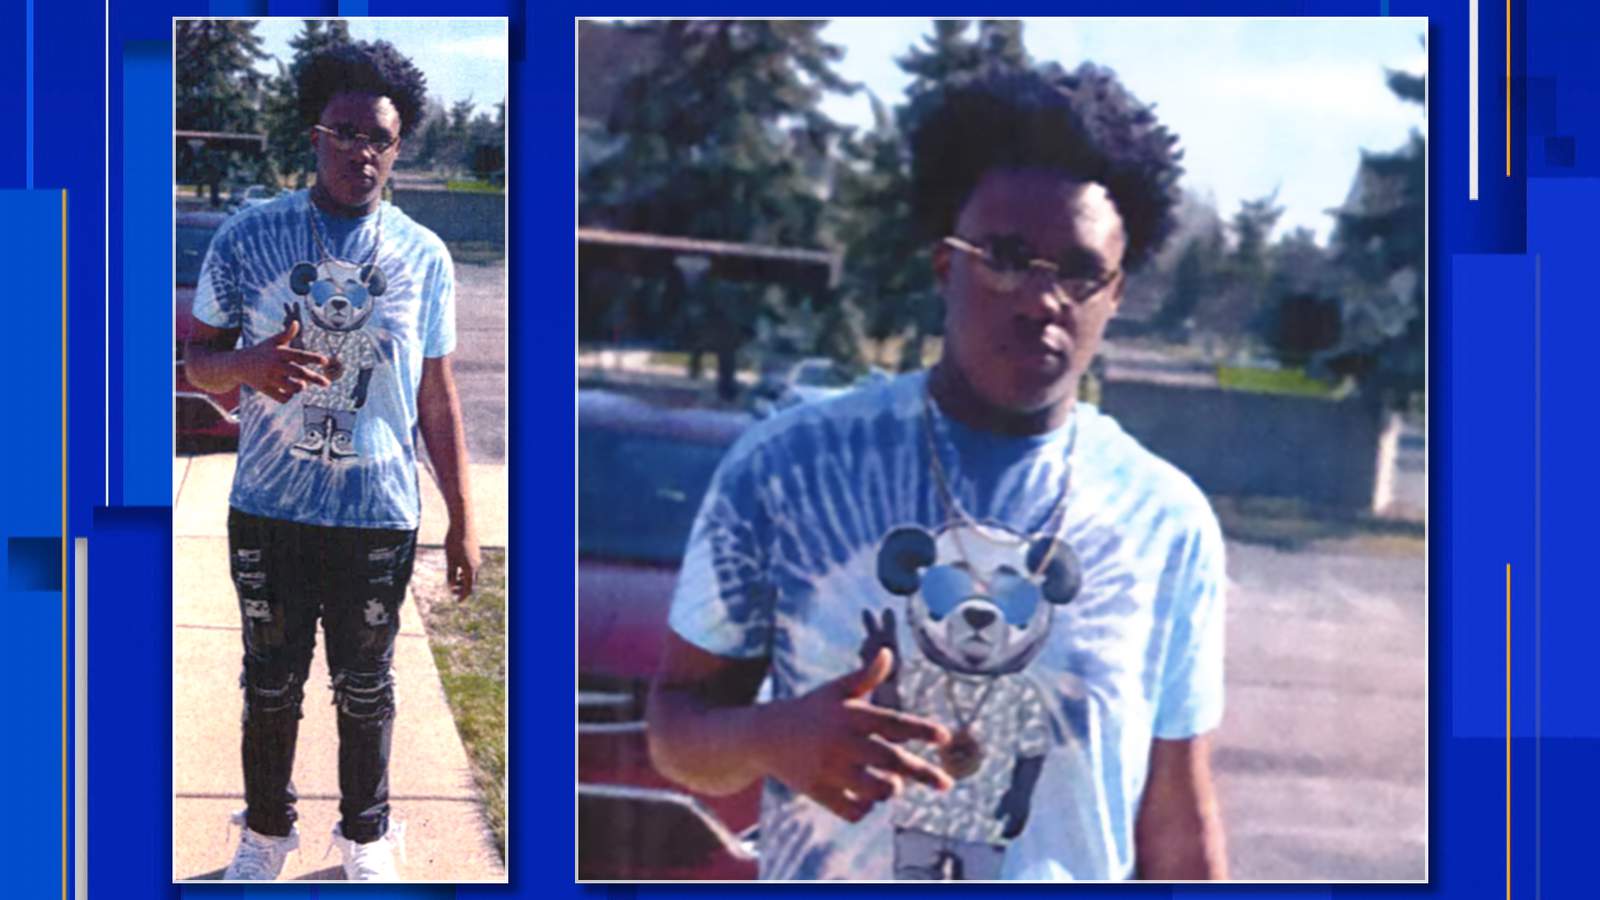 Detroit police seek 15-year-old boy last seen April 6